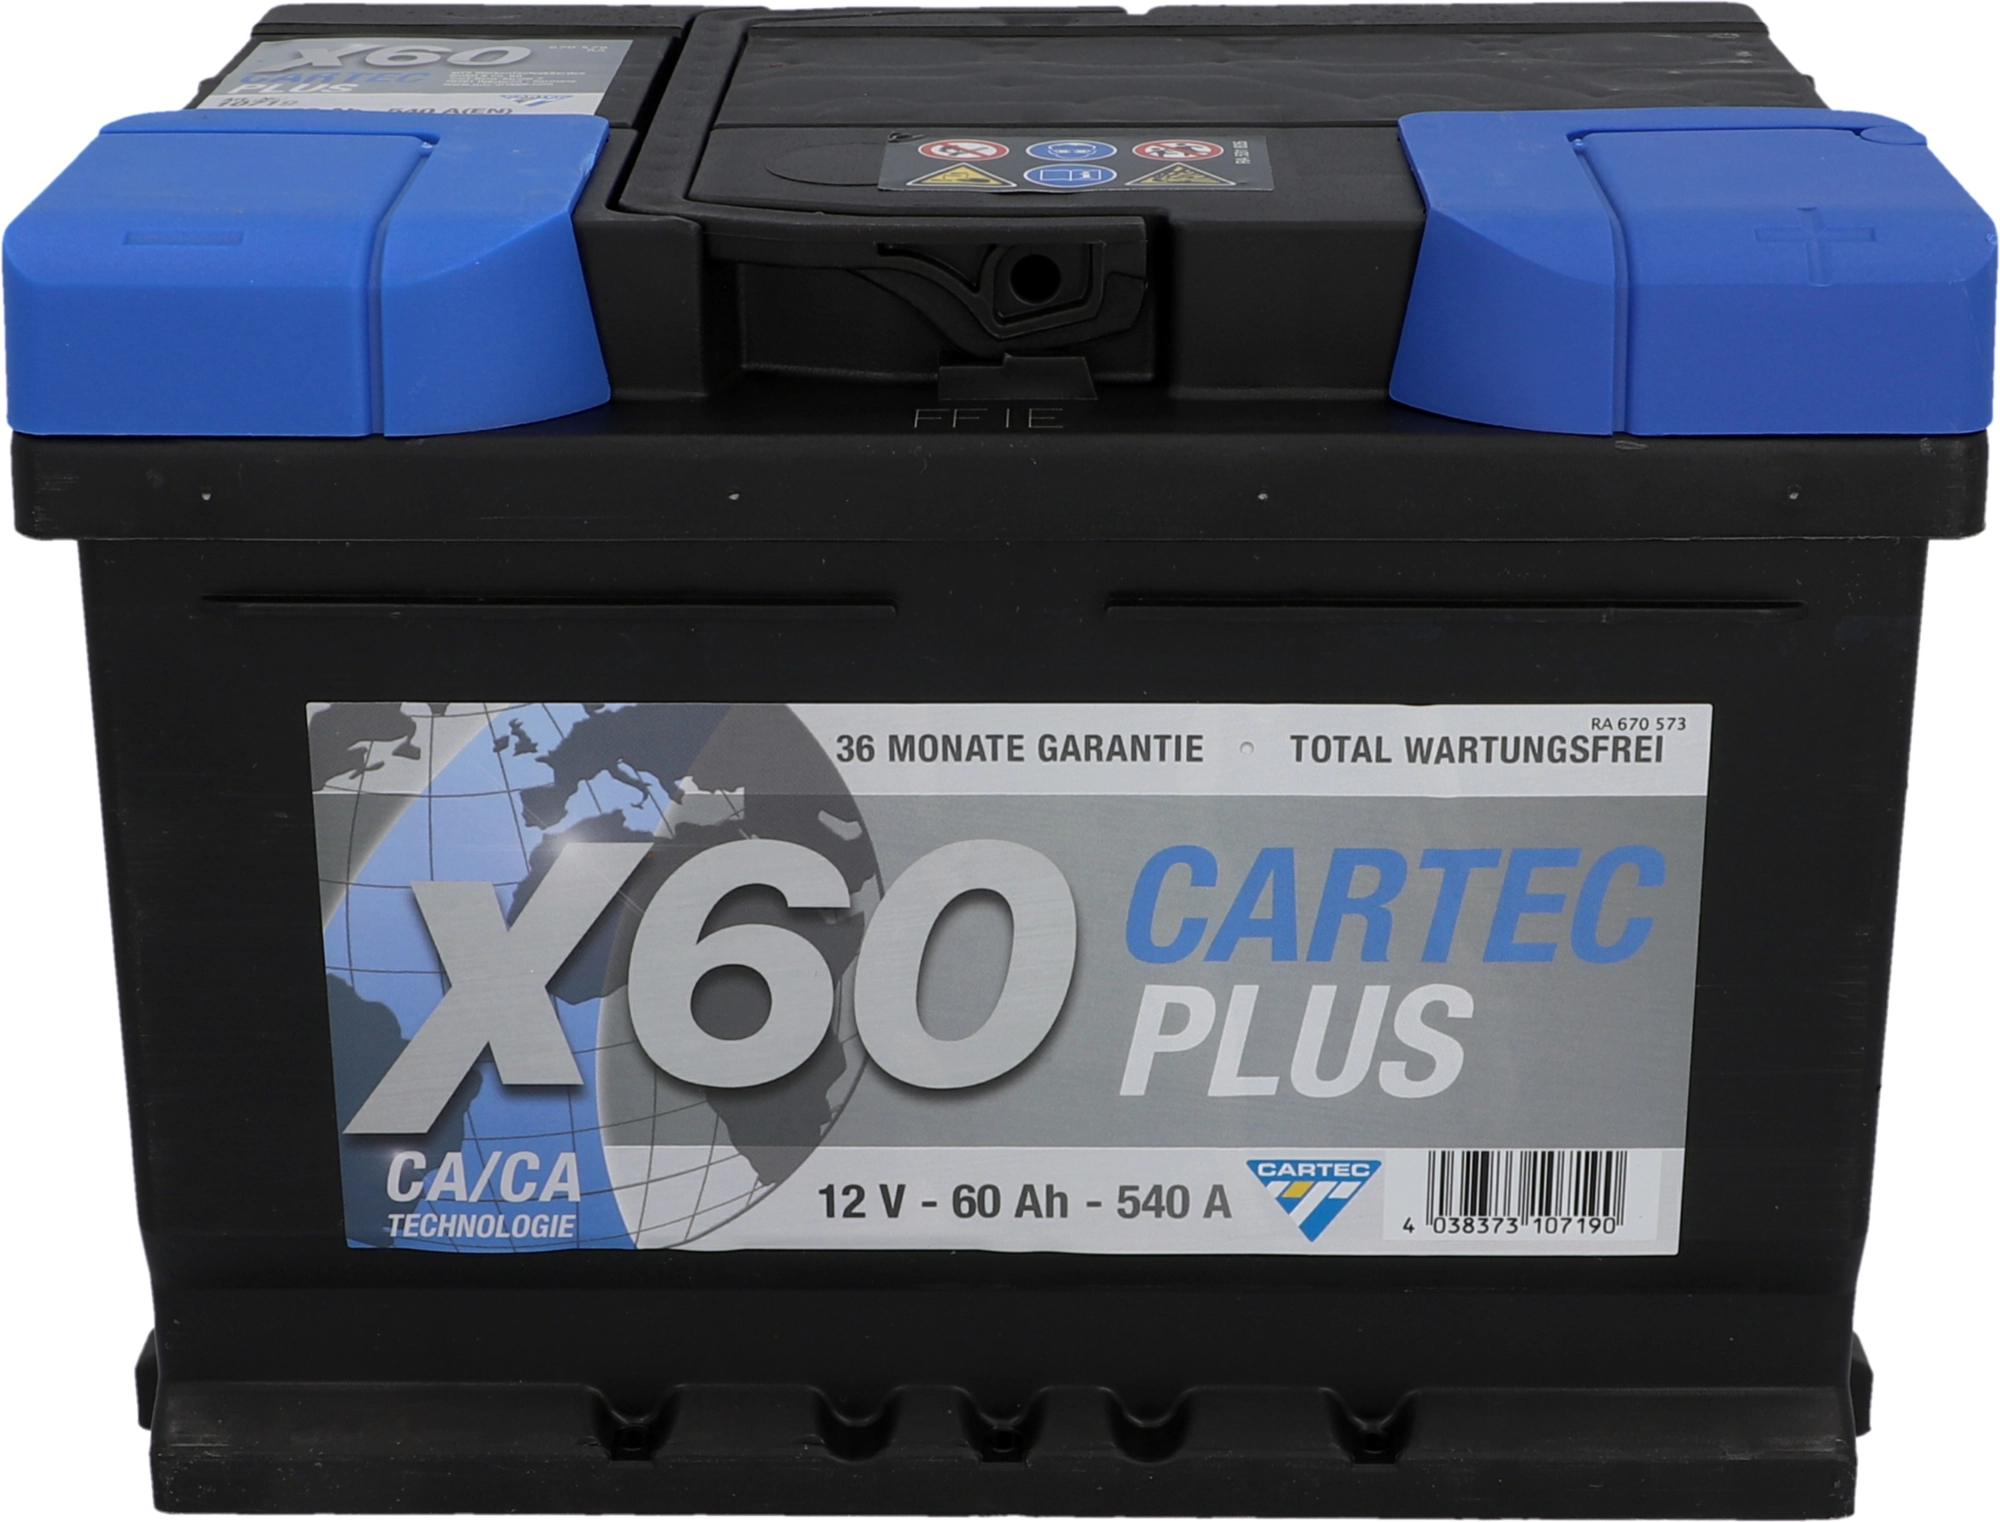 Cartec Starterbatterie Plus 60 Ah/540 A kaufen bei OBI